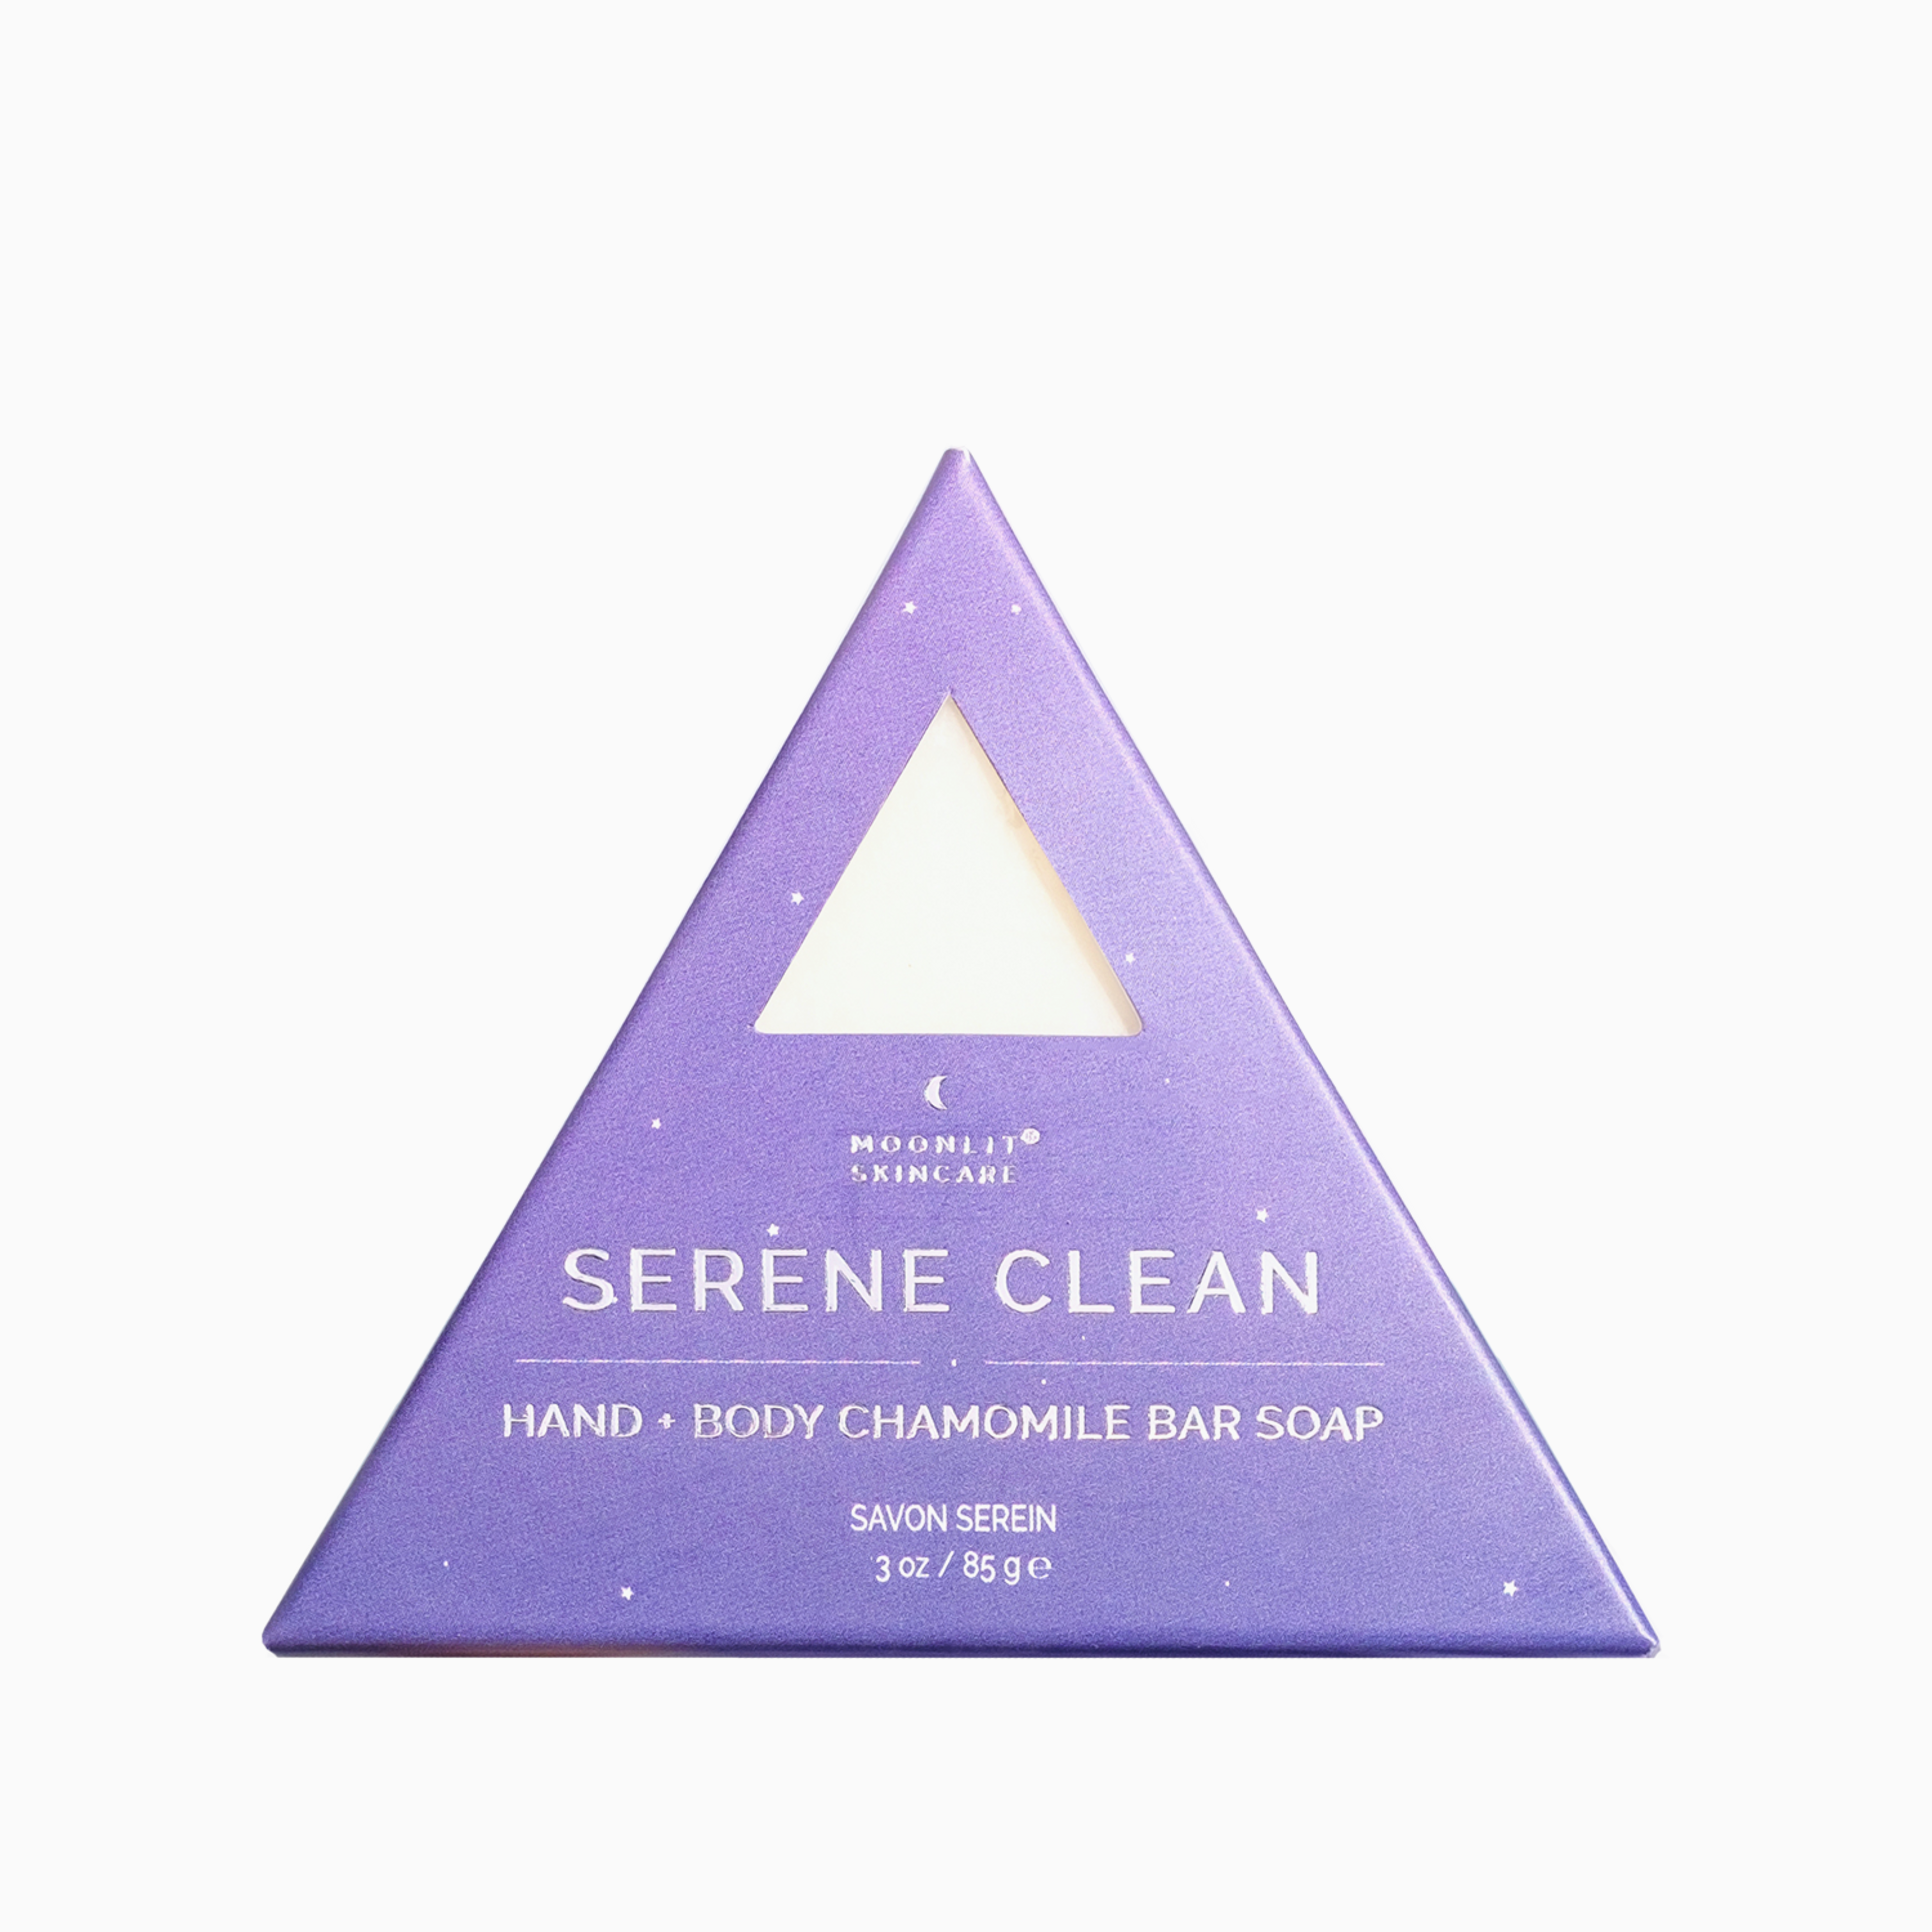 Serene Clean Soap